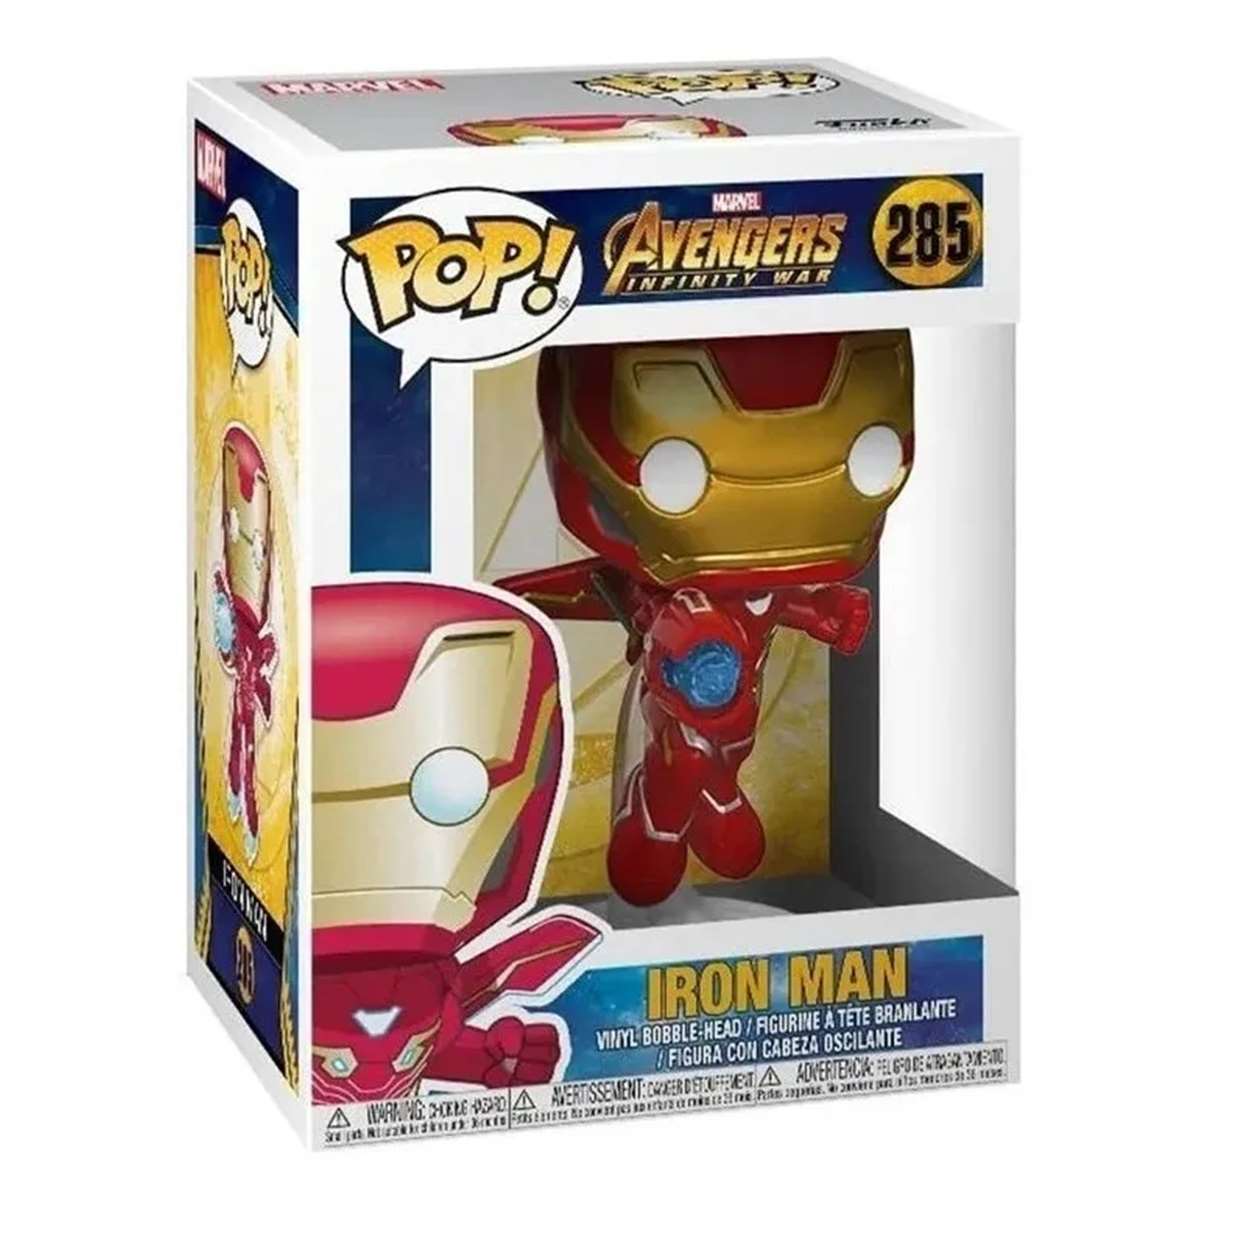 Iron Man #285 Figura Avengers Infinity War Funko Pop! 